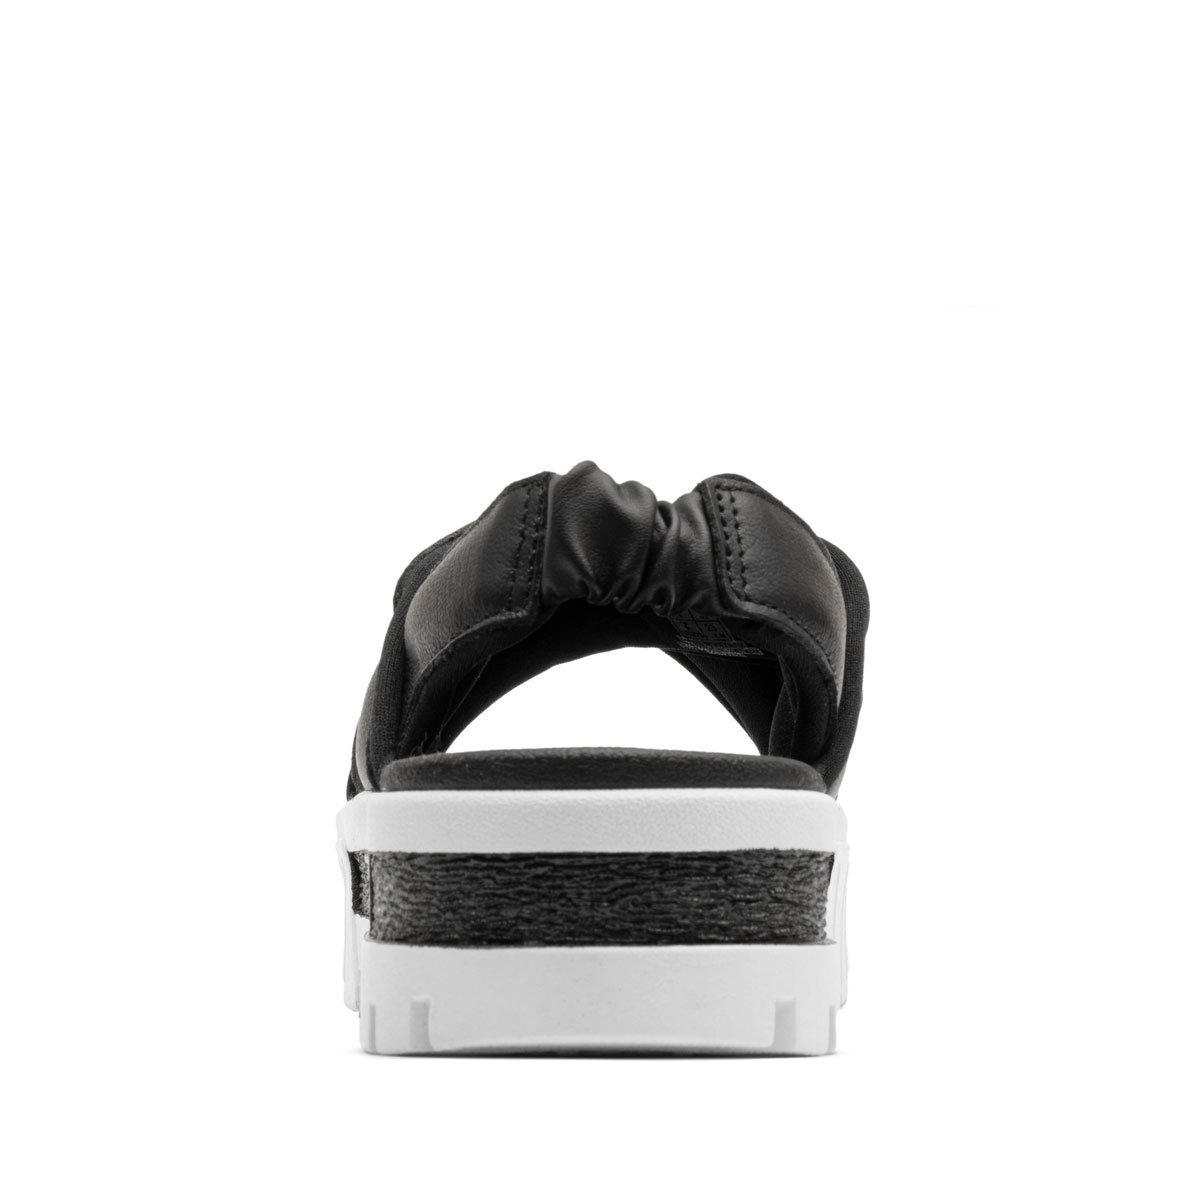 Puma Mayze Sandal Leather Дамски сандали 384830-01